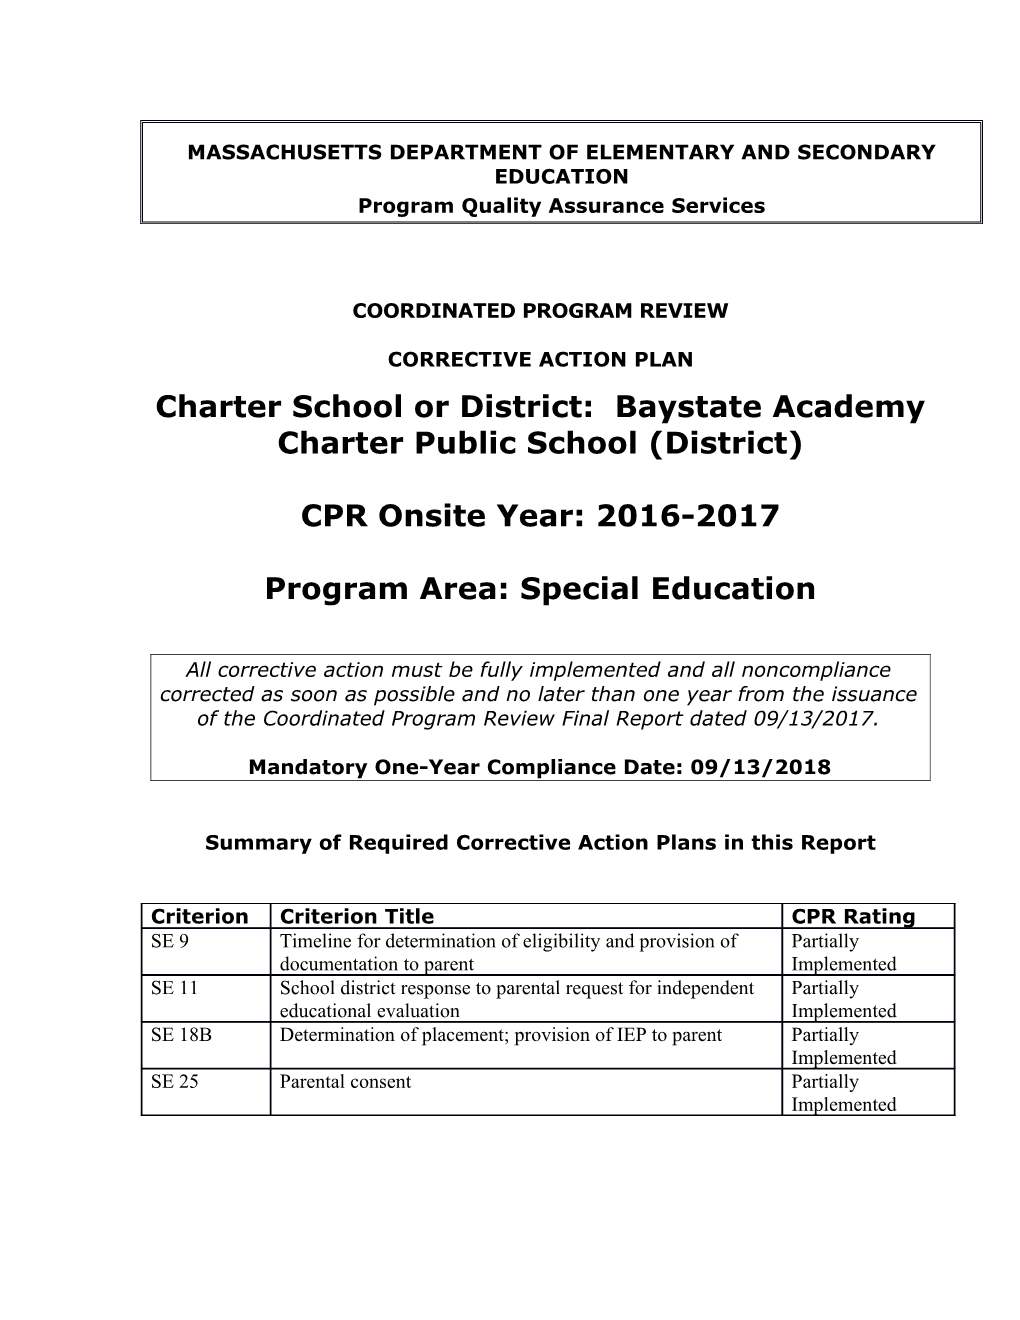 Baystate Academy Charter School CAP 2017